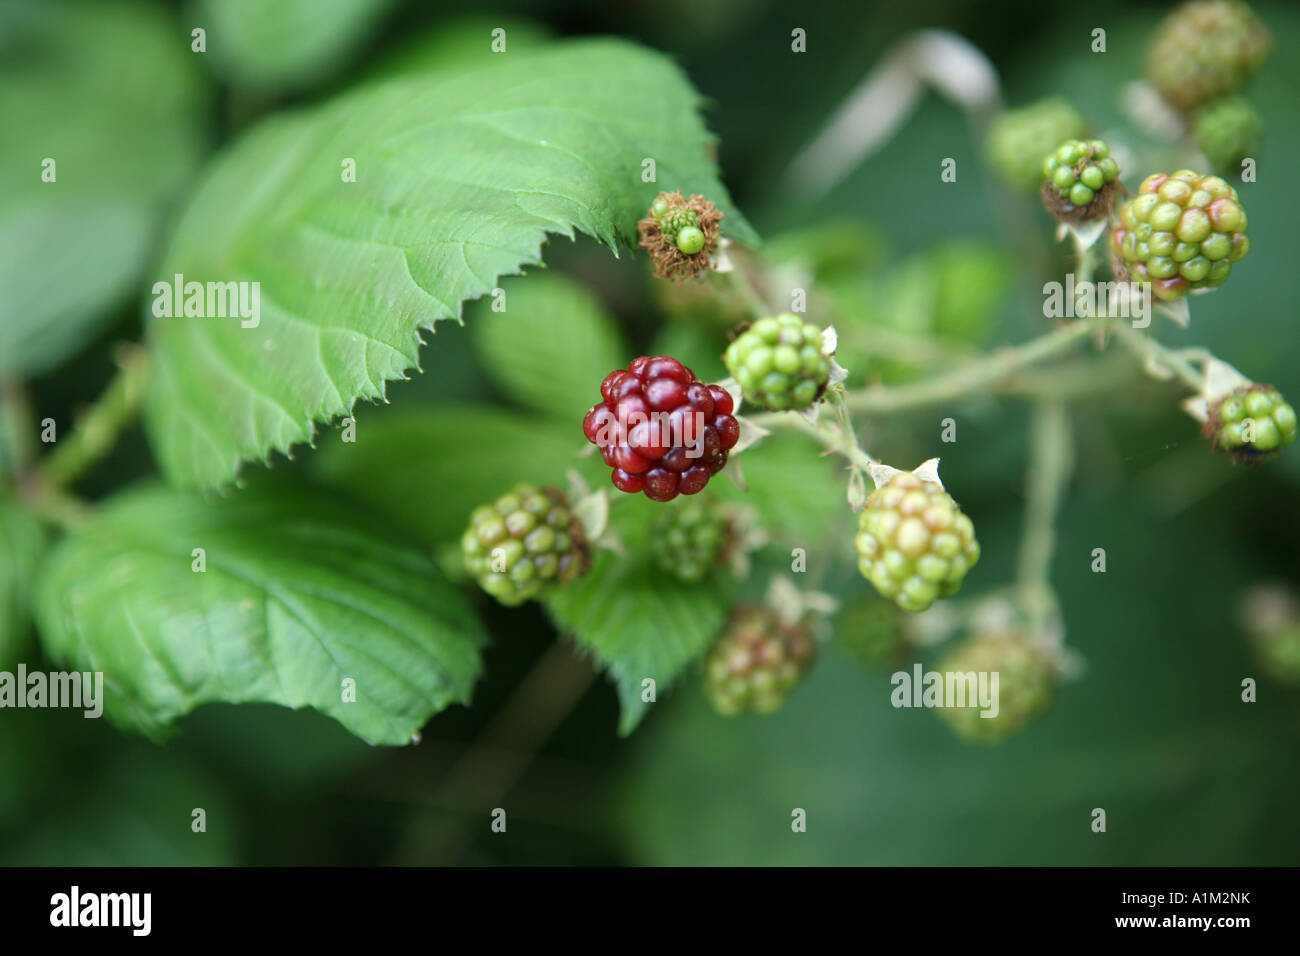 Unripe Blackberries on bramble in garden Stock Photo